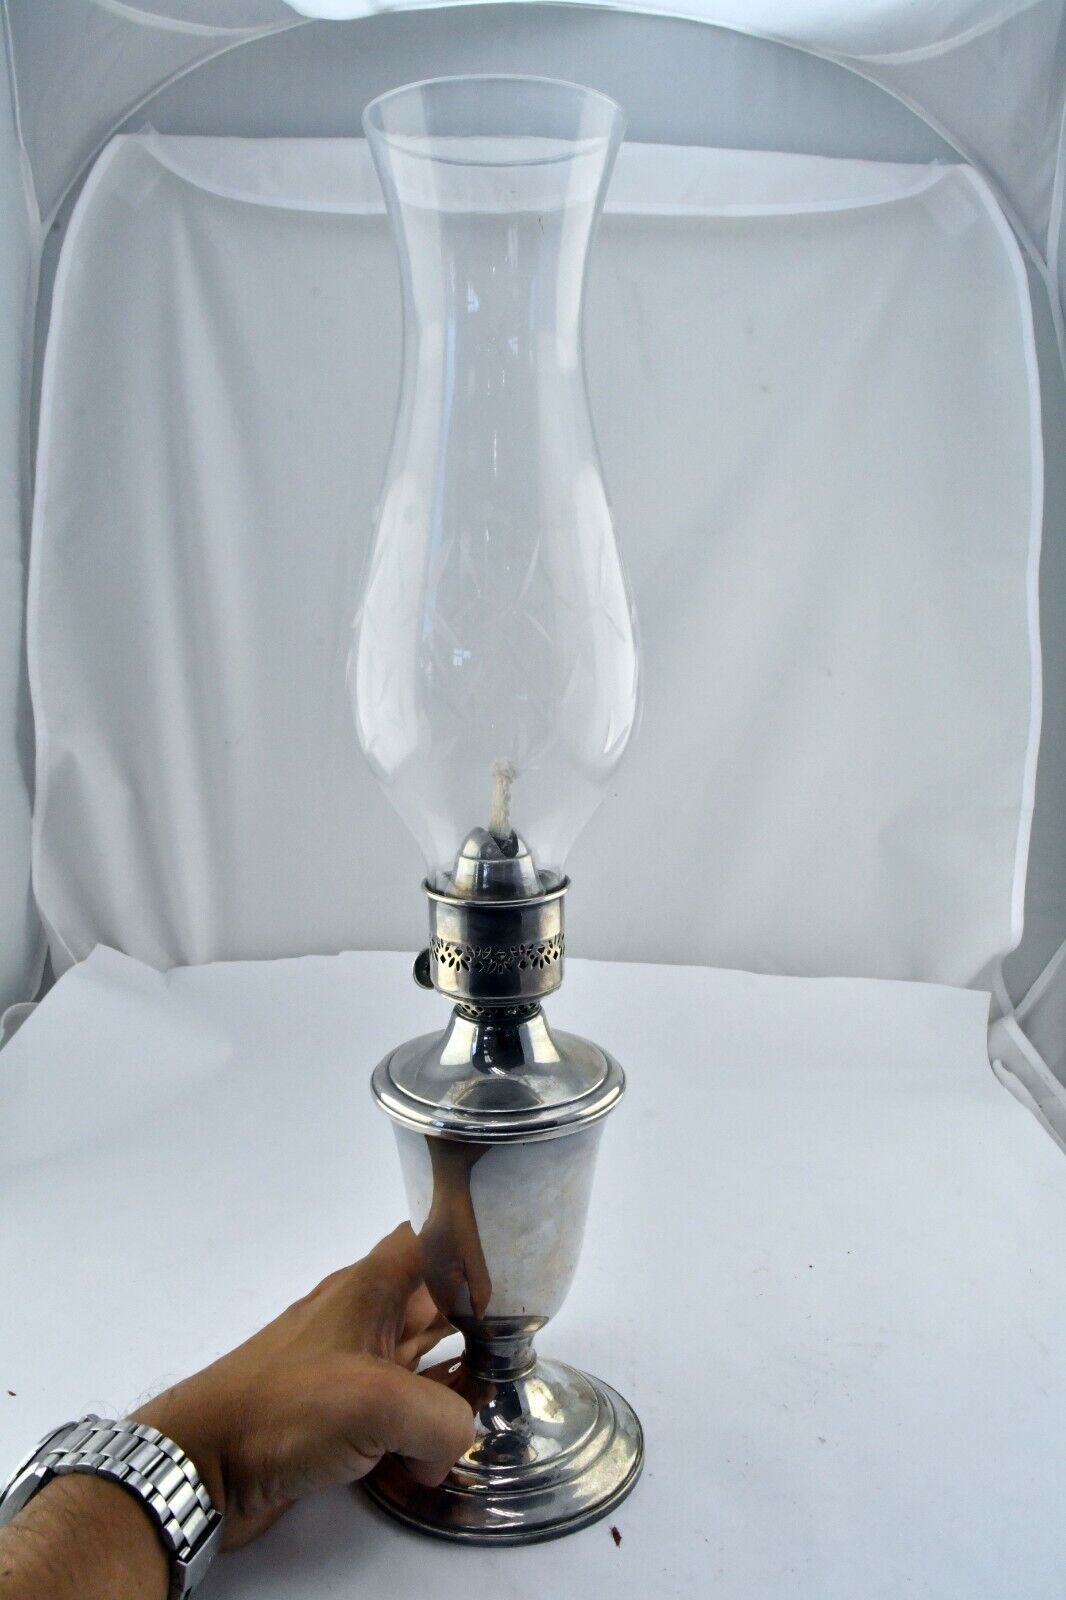 17" Vintage Gorham Silver Plate Kerosene Lamp with Glass Hurricane #YC490